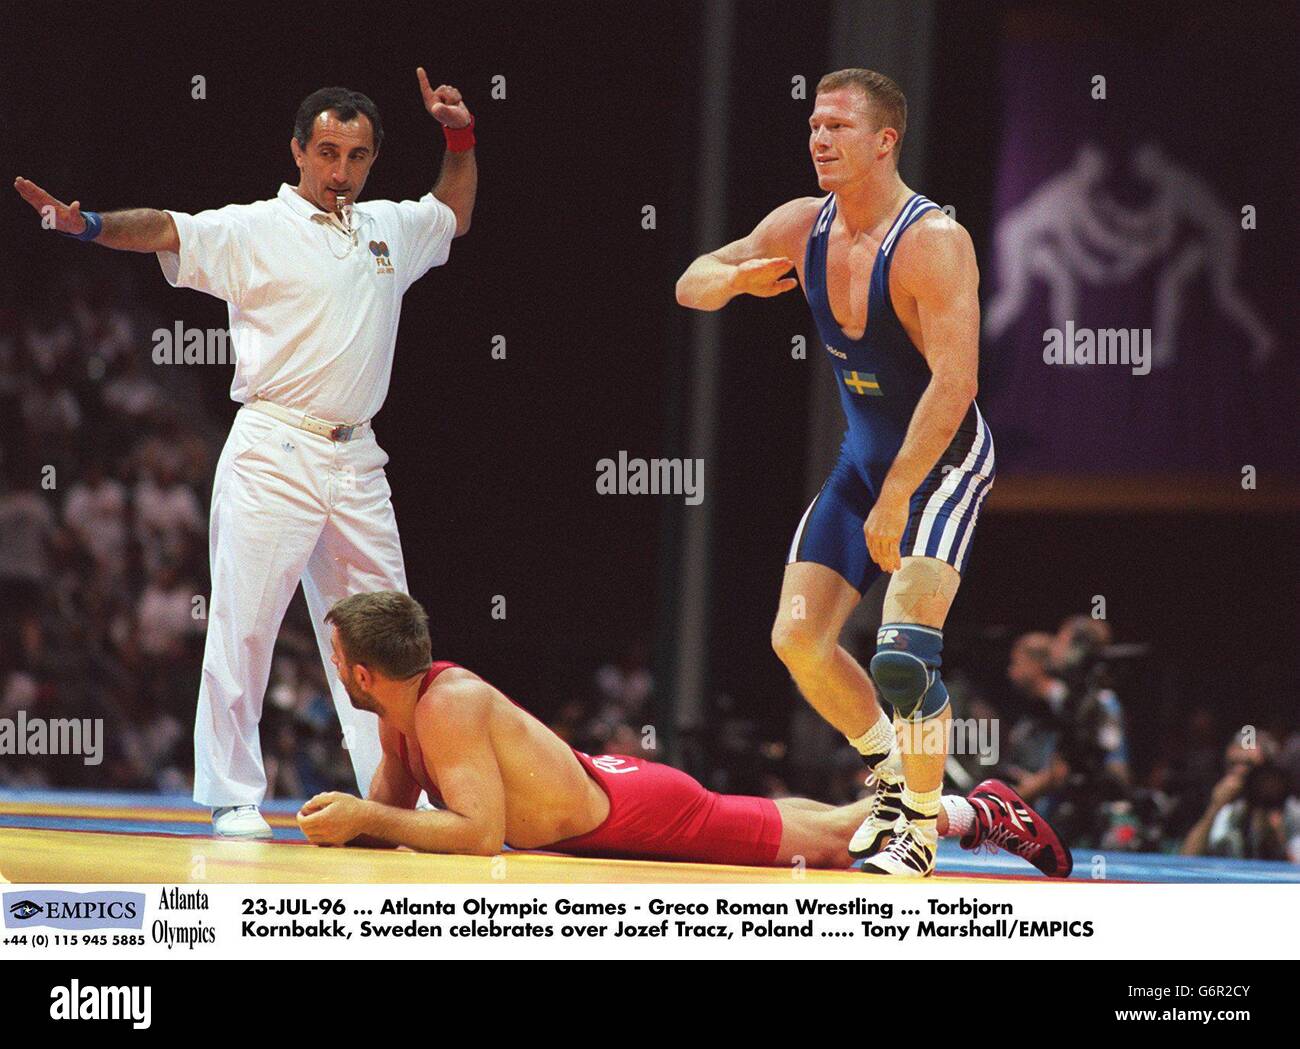 23-JUL-96. Atlanta Olympic Games - Greco Roman Wrestling. Torbjorn Kornbakk, Sweden celebrates over Jozef Tracz, Poland. Tony Marshall/EMPICS Stock Photo